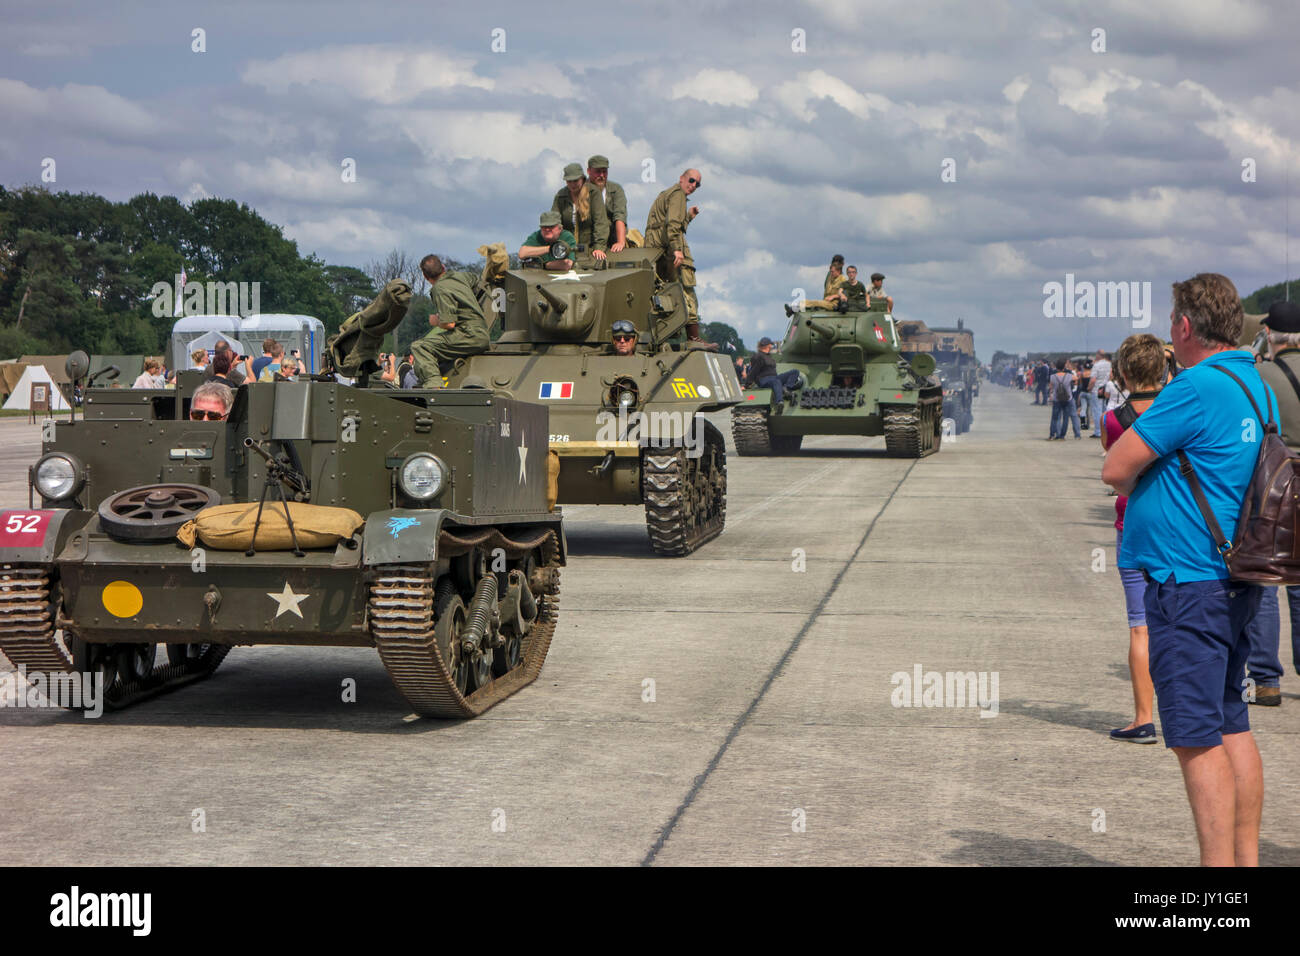 Visitors looking at parade of WW2 military armoured vehicles at World War Two militaria fair Stock Photo